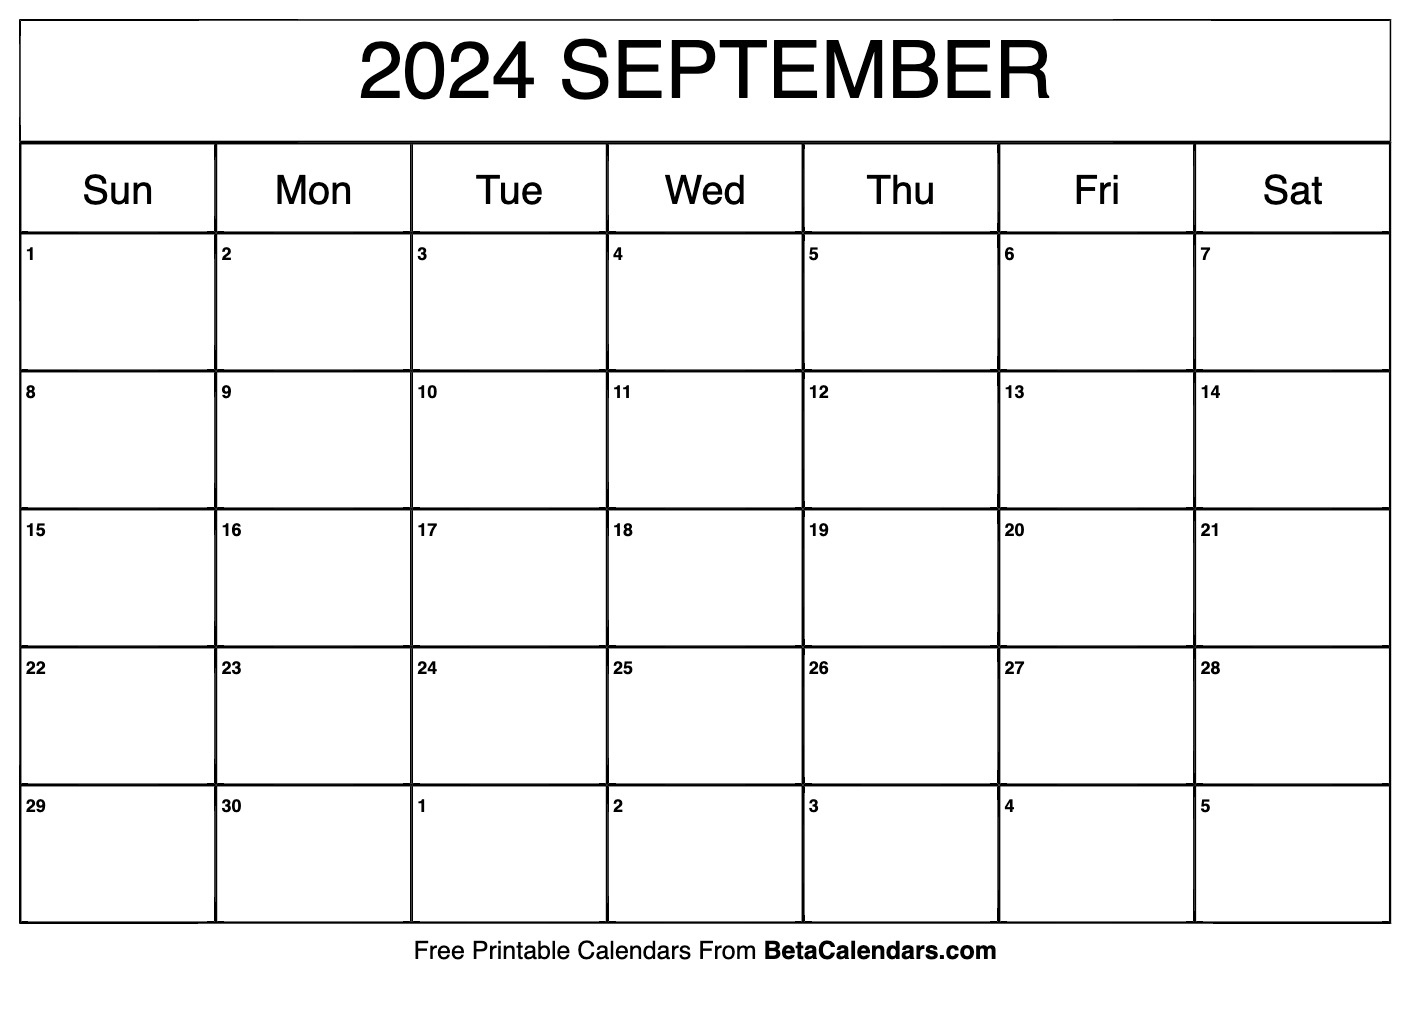 Free Printable September 2024 Calendar | Printable Calendar 2024 September